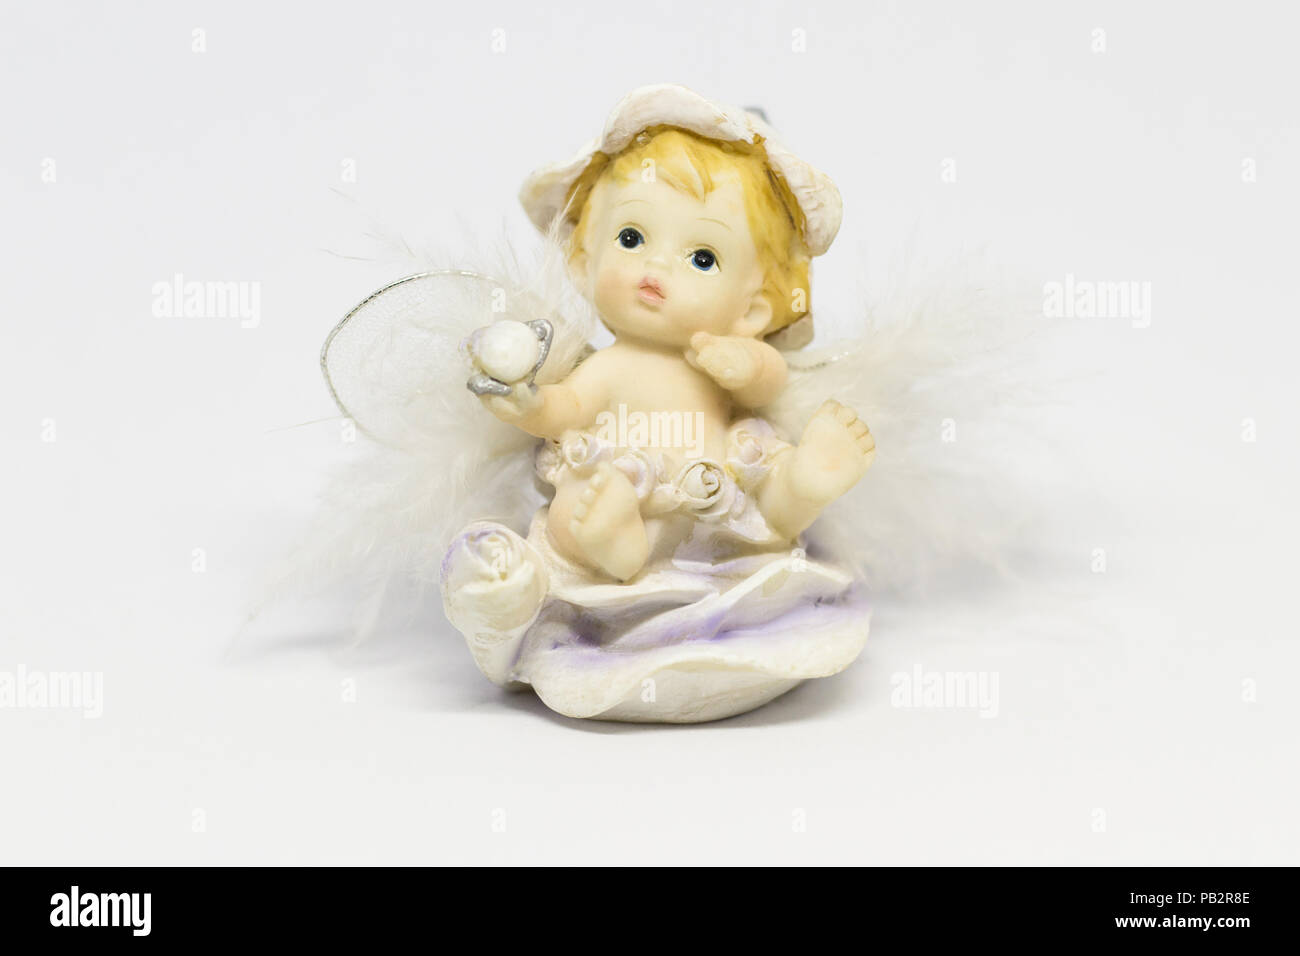 Little angel figurine Stock Photo